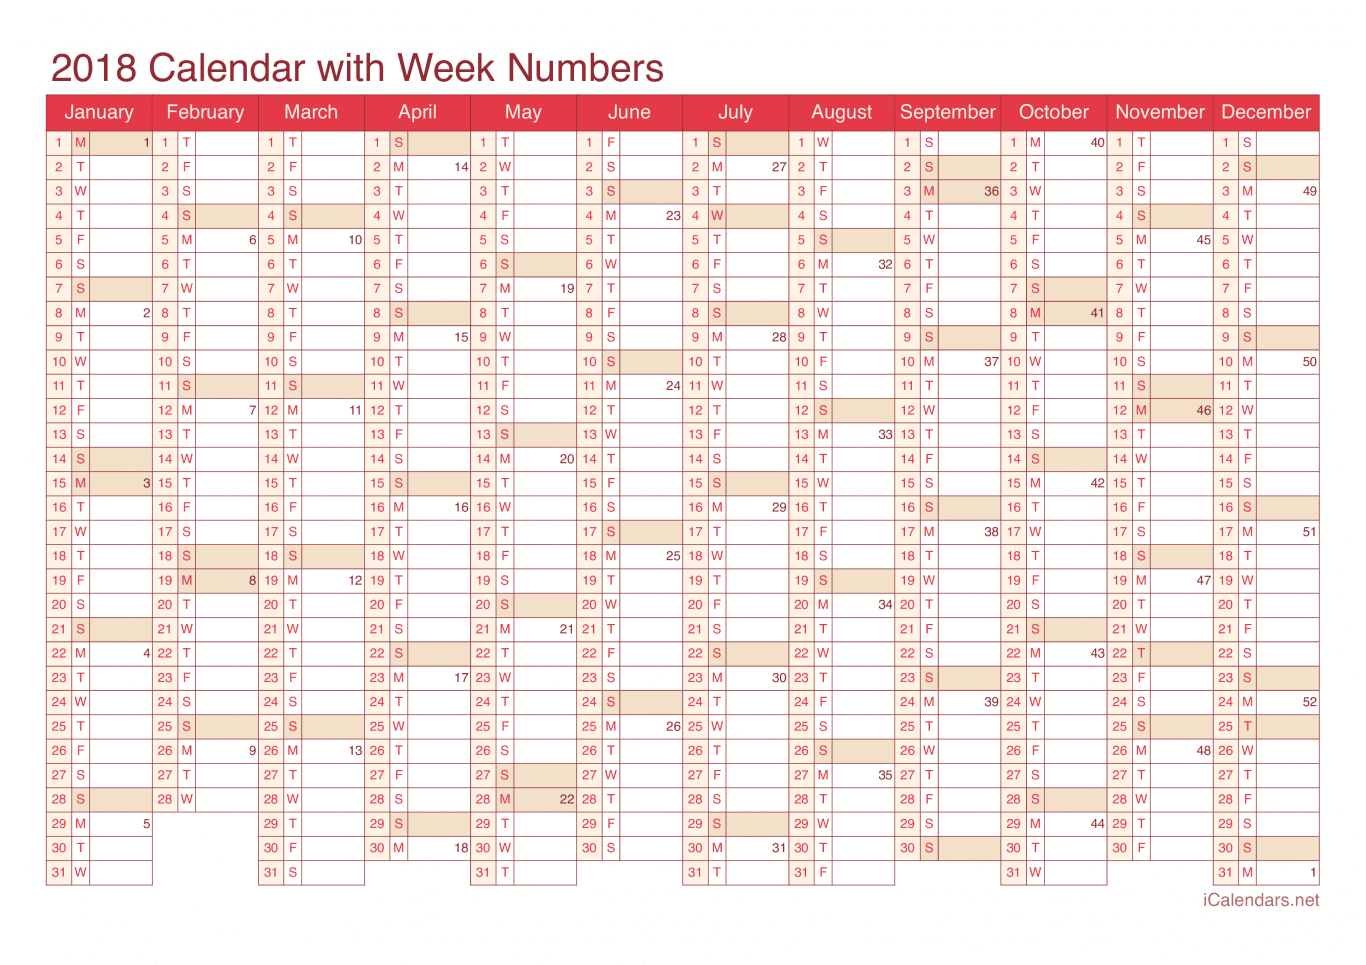 2018 Calendar with week numbers - Cherry